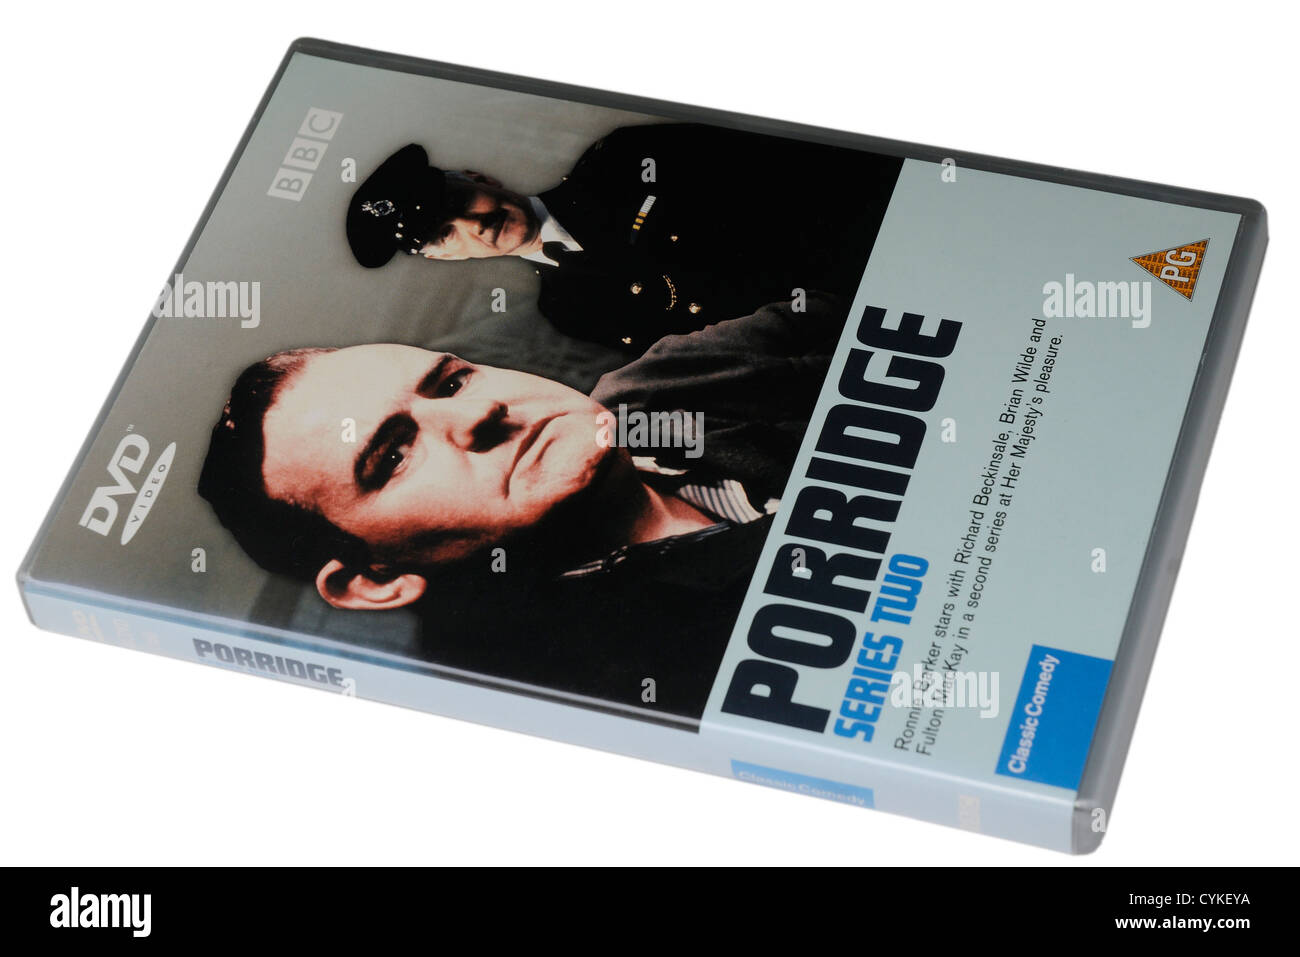 BBC classic comedy Porridge with Ronnie Barker on DVD Stock Photo